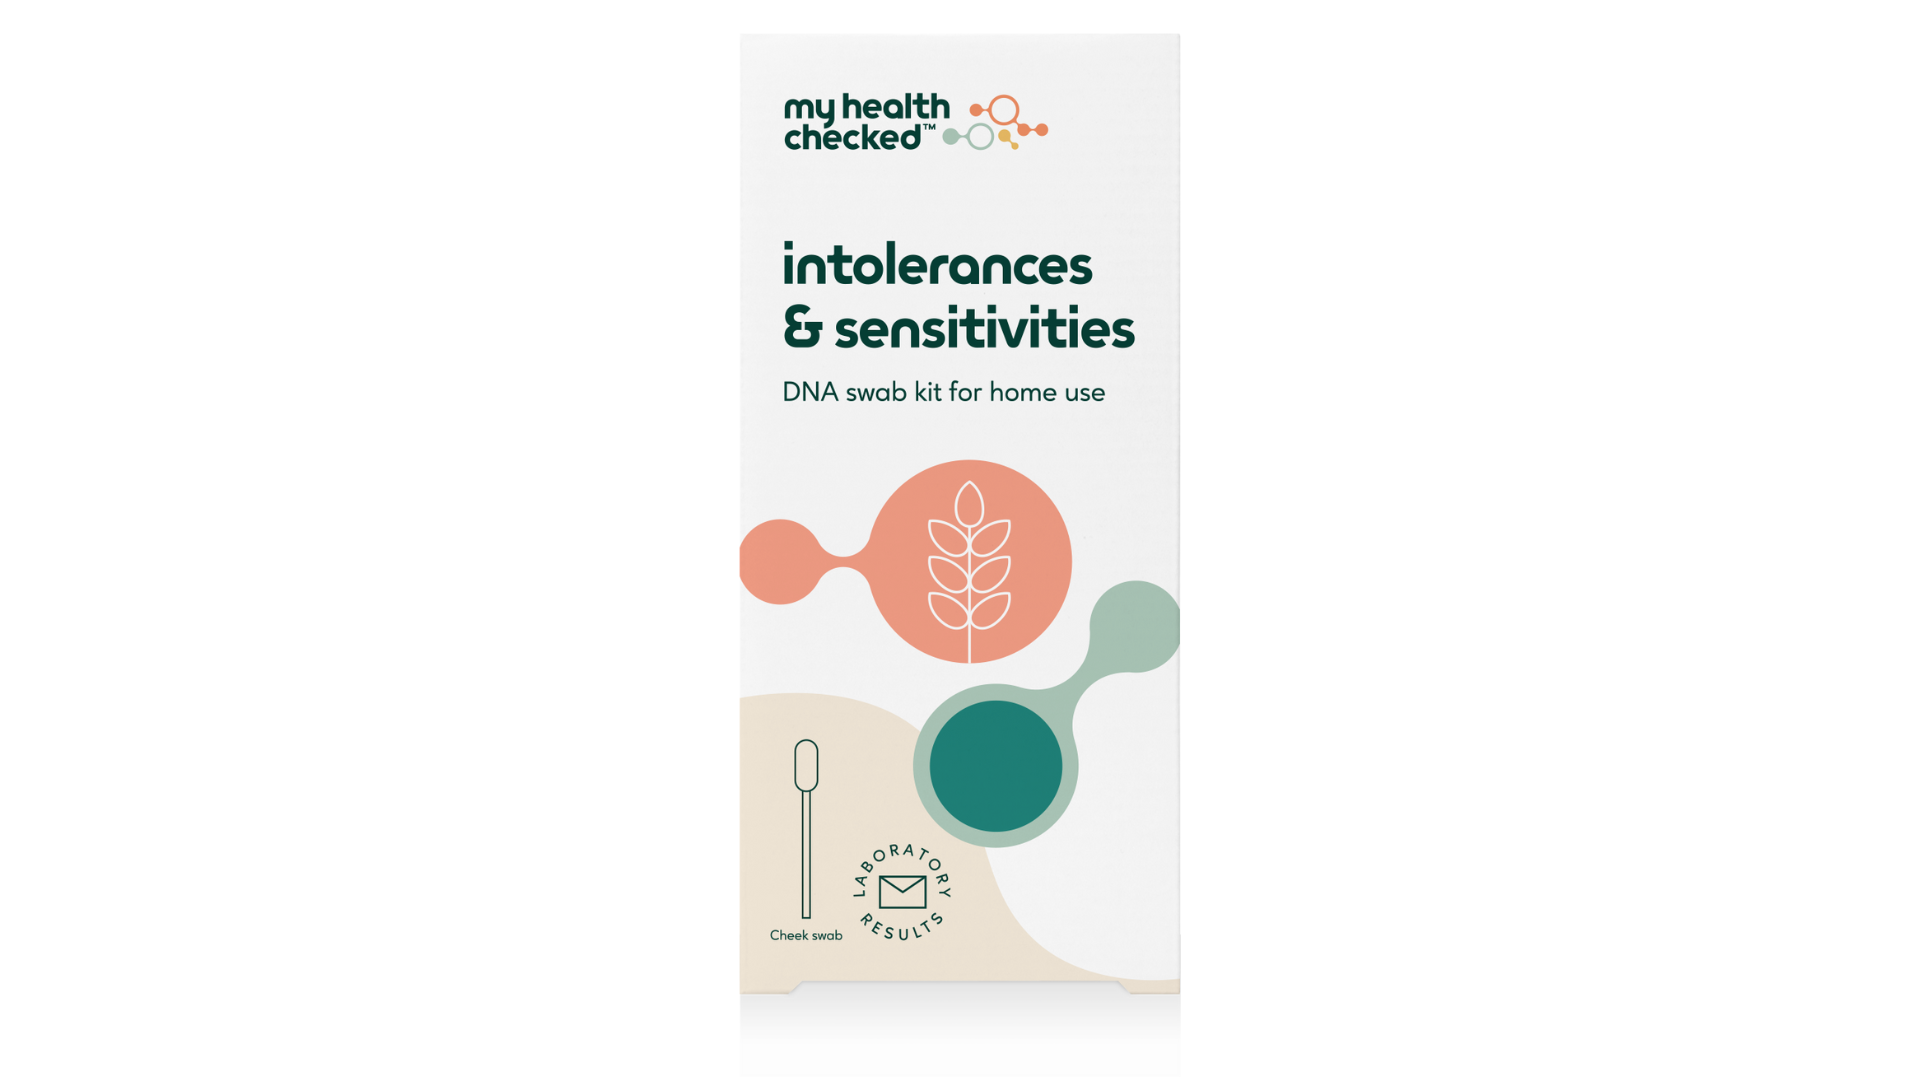 MyHealthChecked's Intolerances & Sensitivities DNA Test